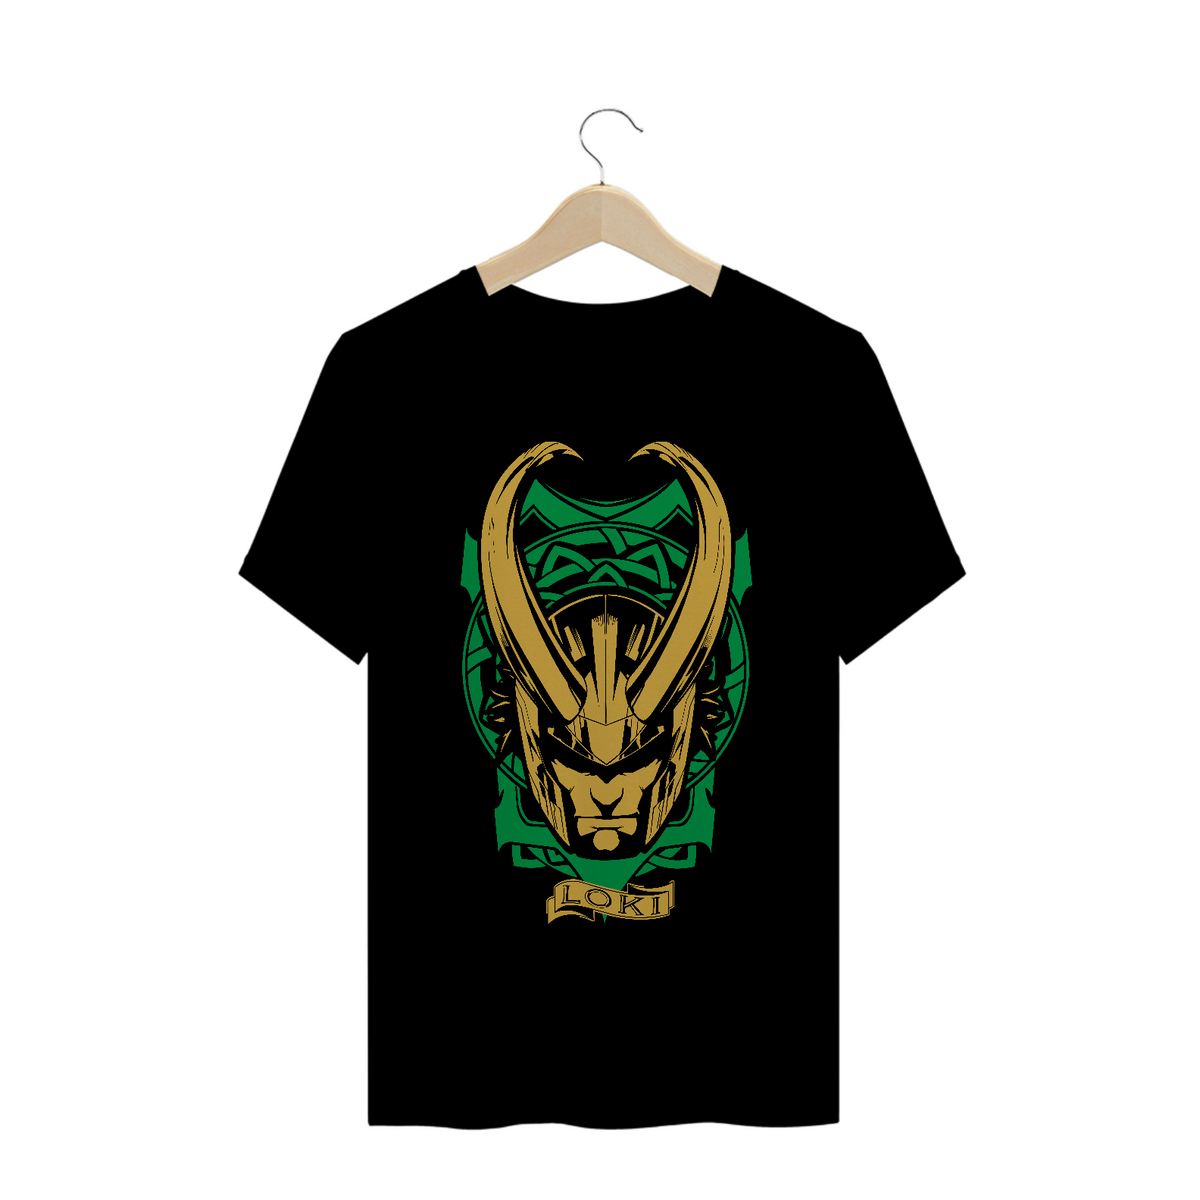 Nome do produto: Camiseta Loki Avengers Duo